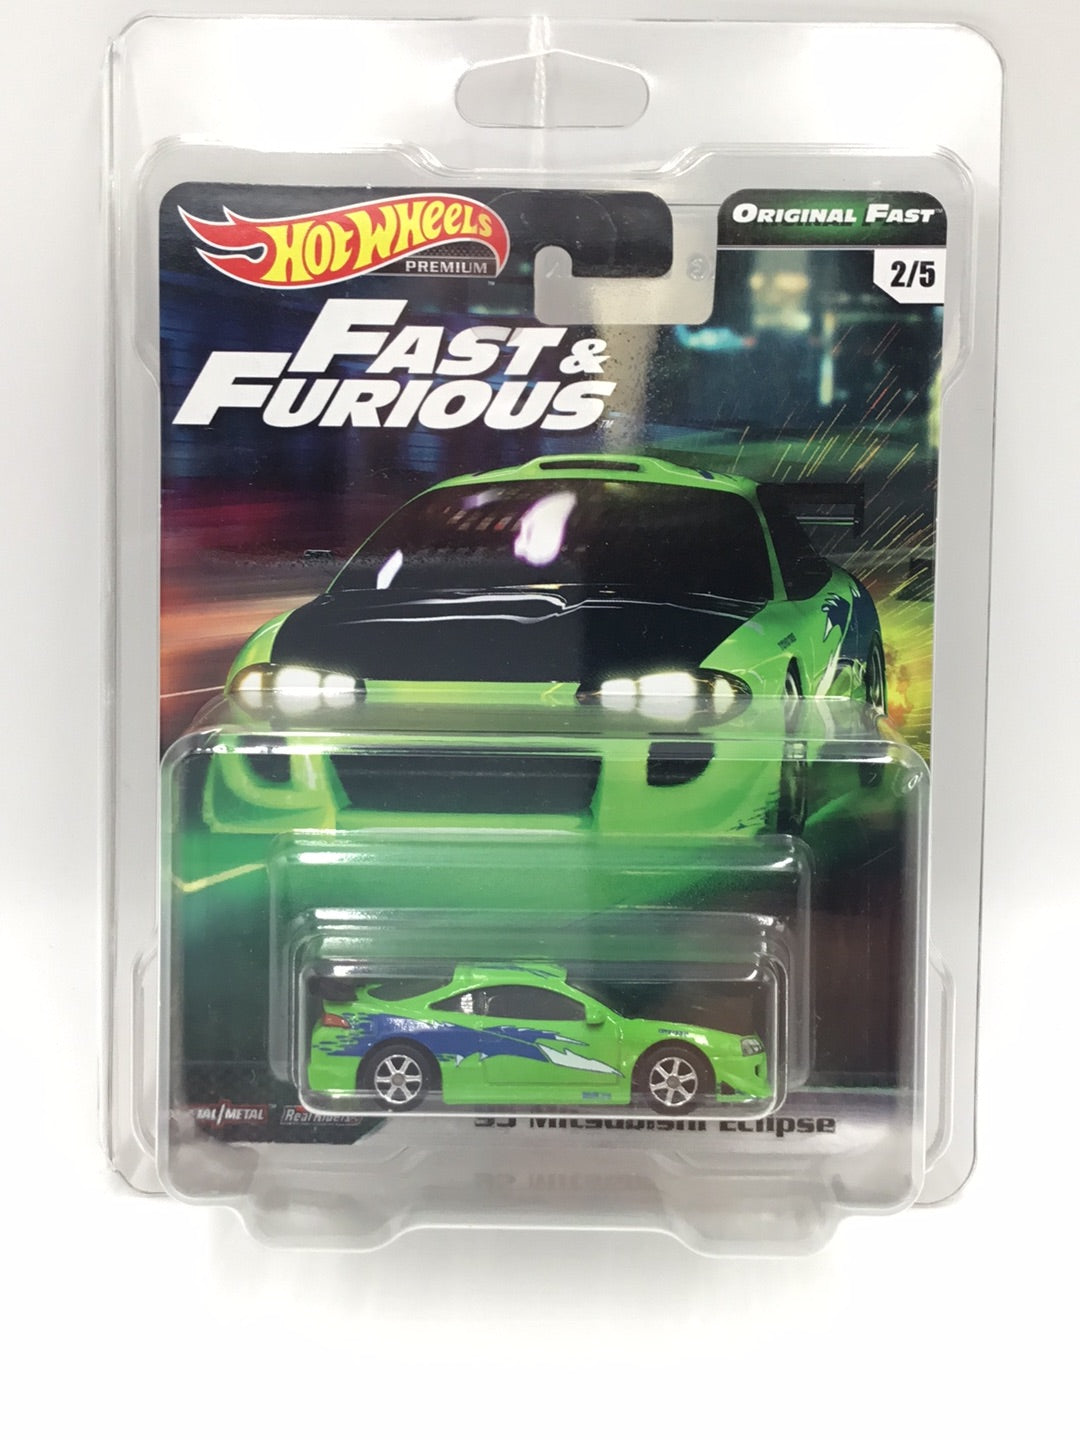 Hot wheels premium fast and furious Original Fast 95 Mitsubishi Eclipse 2/5